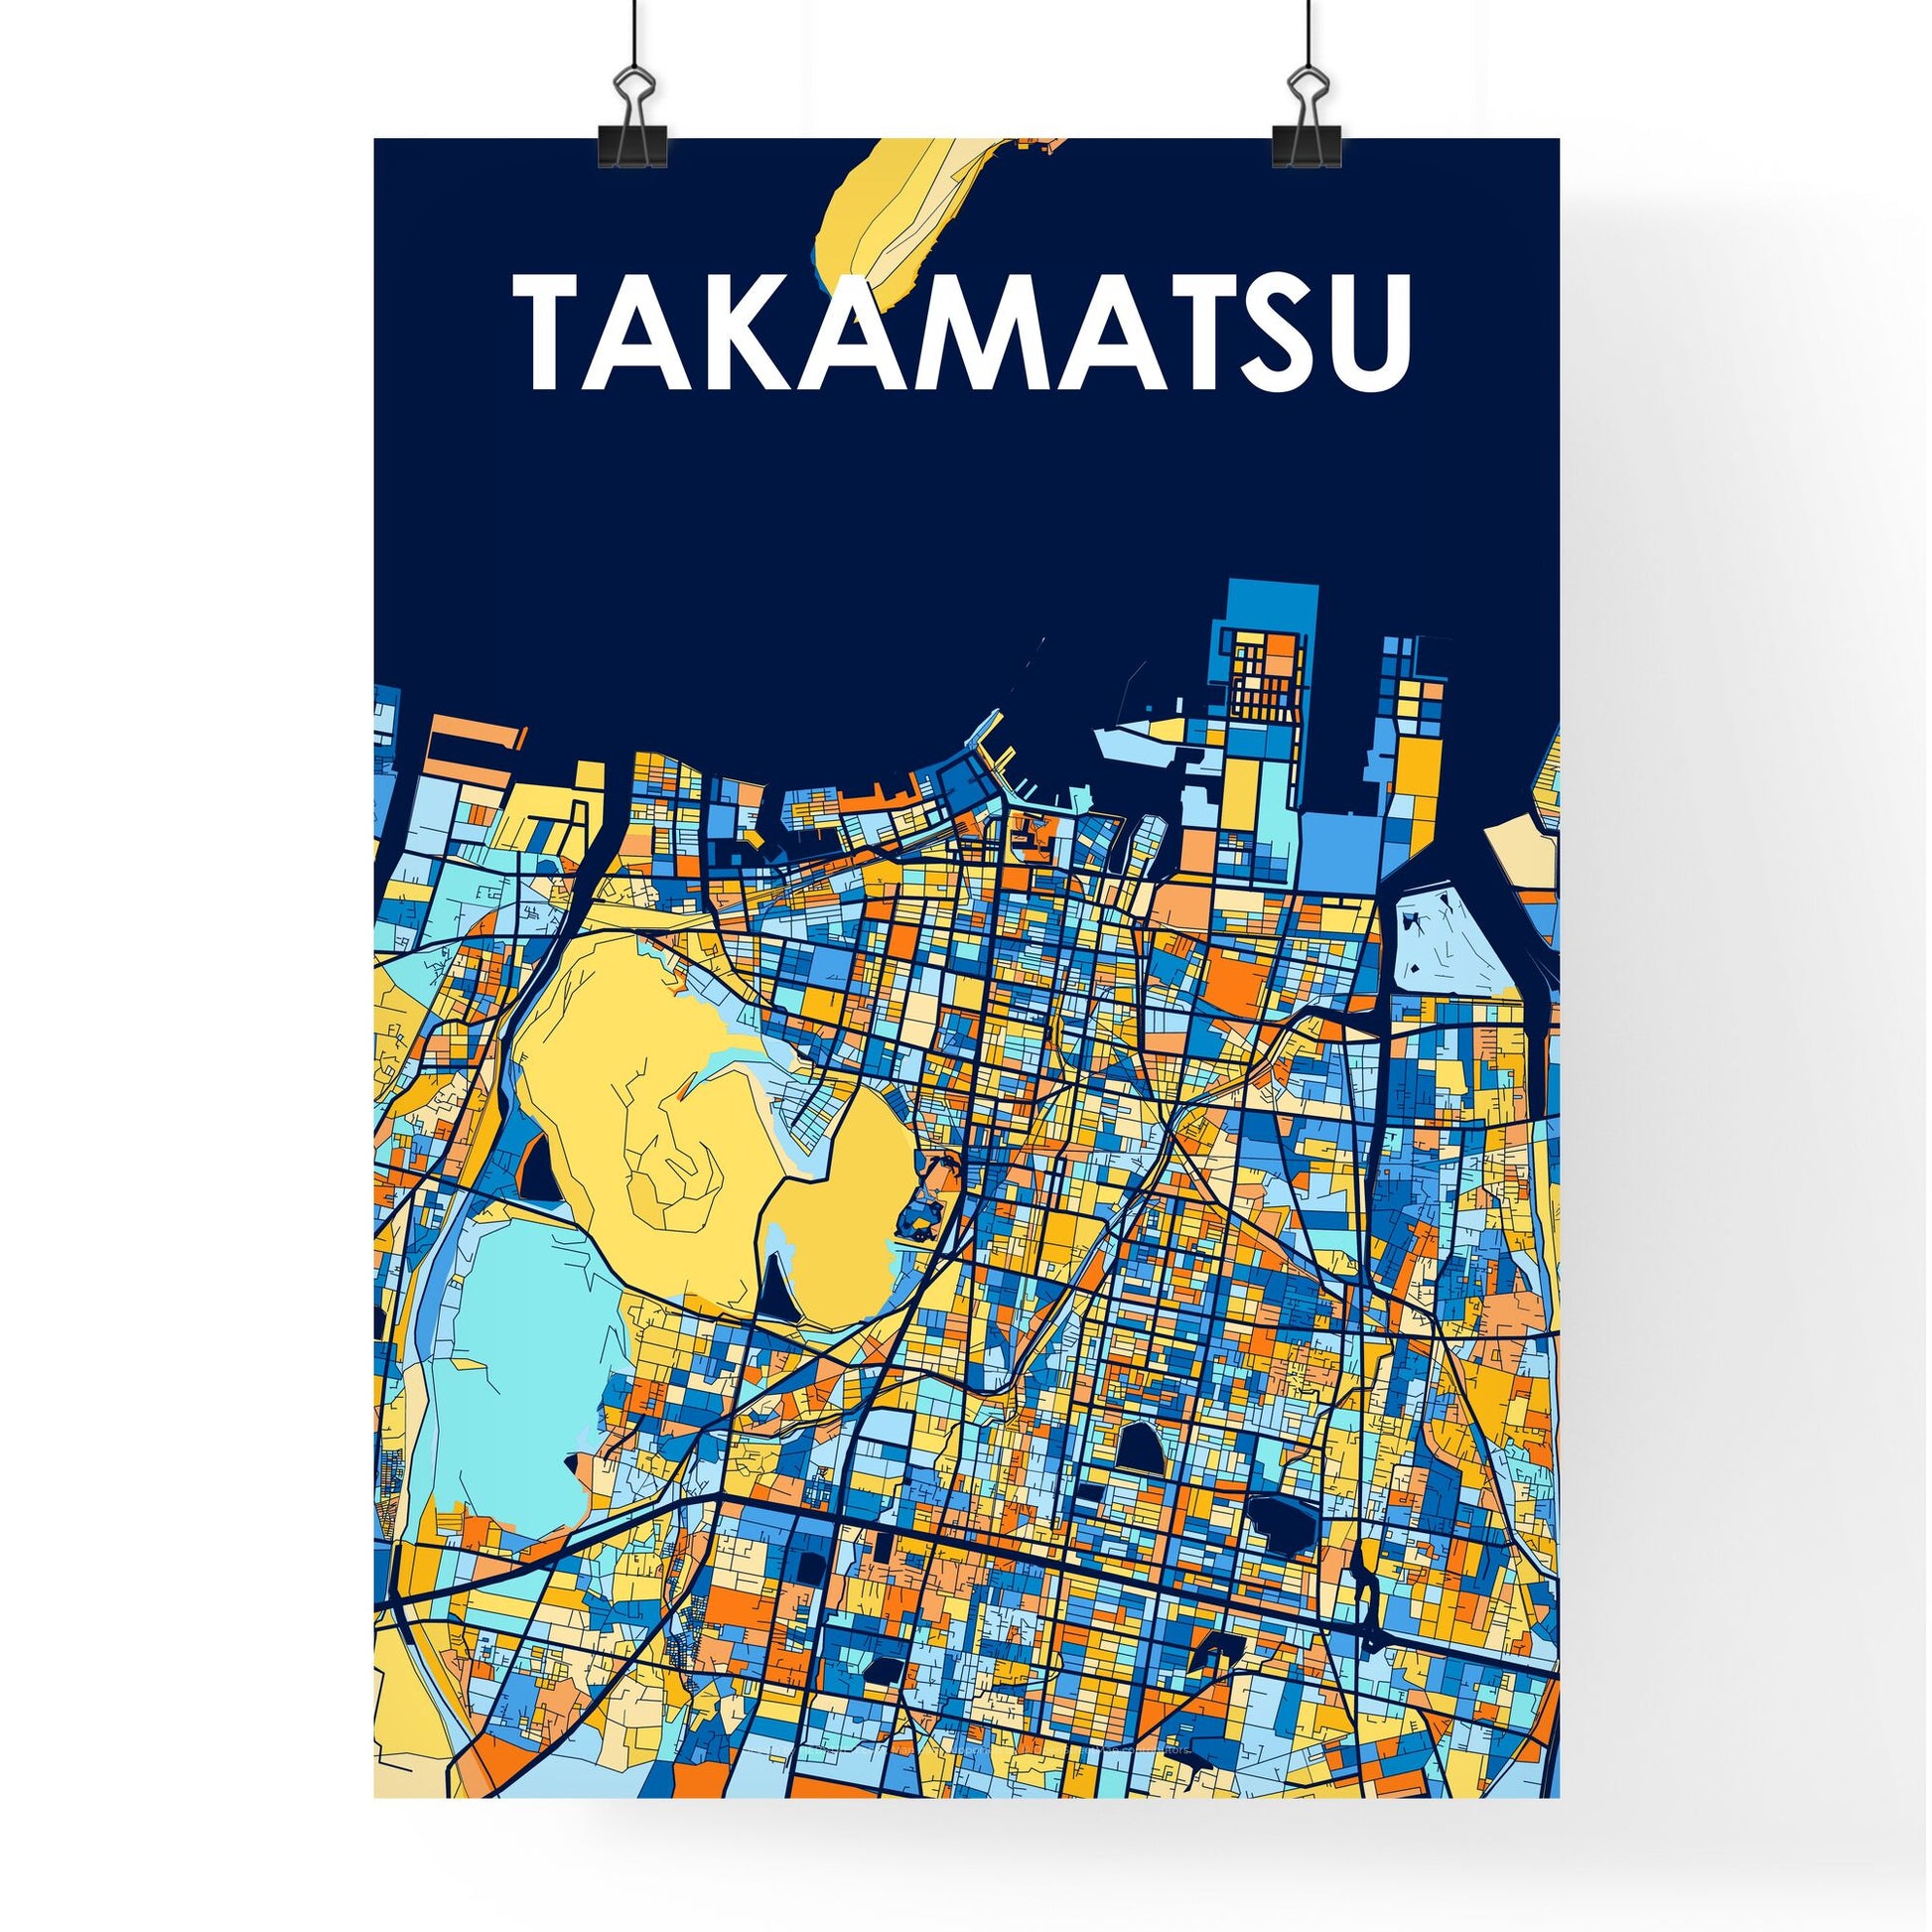 TAKAMATSU JAPAN Vibrant Colorful Art Map Poster Blue Orange